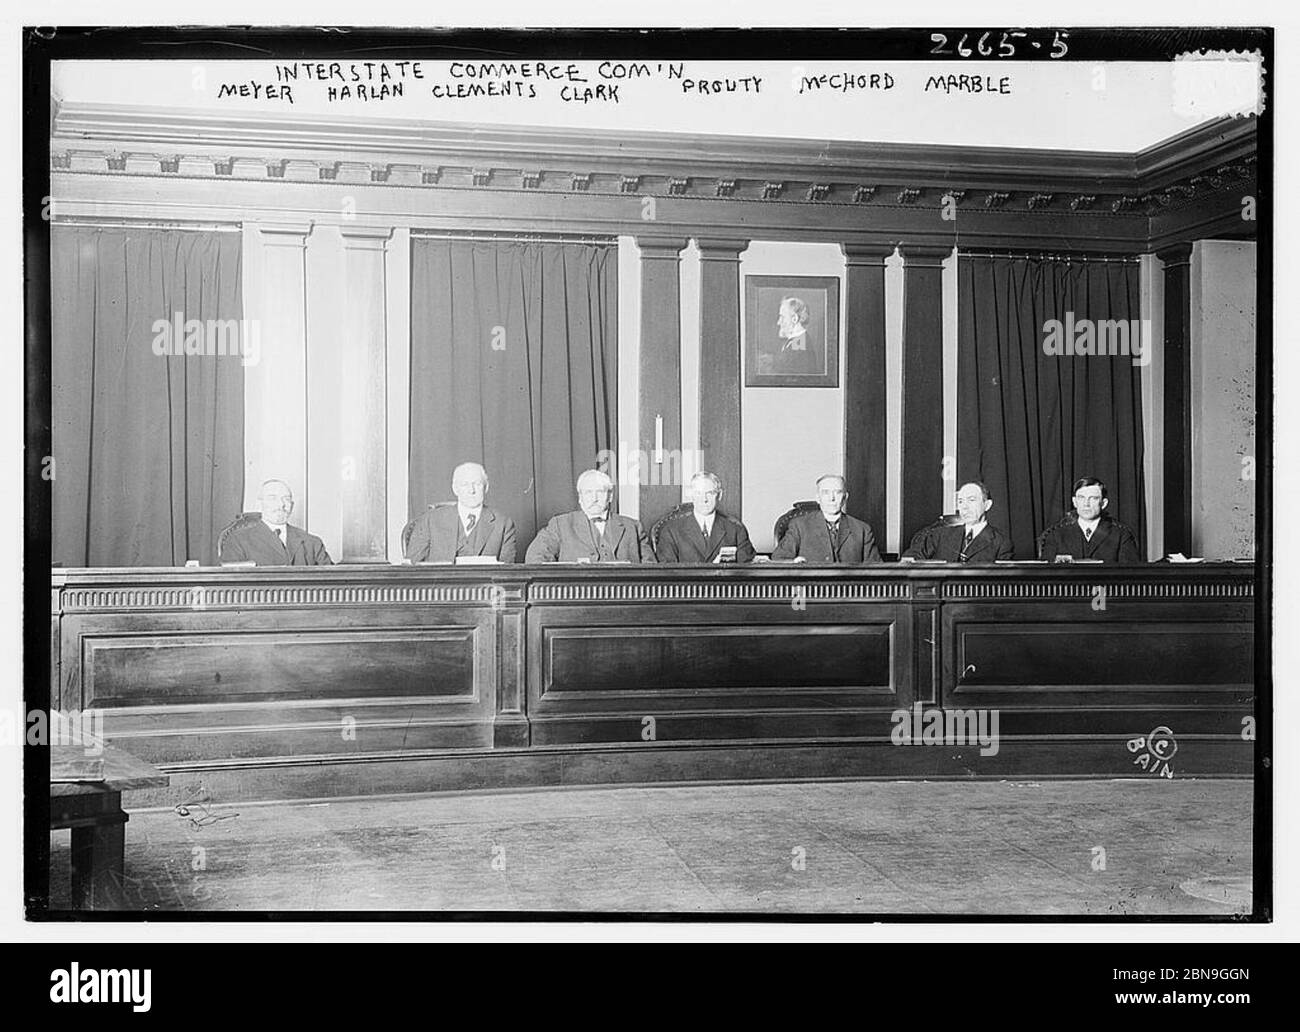 Interstate Commerce COM'n, Meyer, Harlan, Clements, Clark, Prouty, McChord, Marble (LOC) por la Biblioteca del Congreso Foto de stock